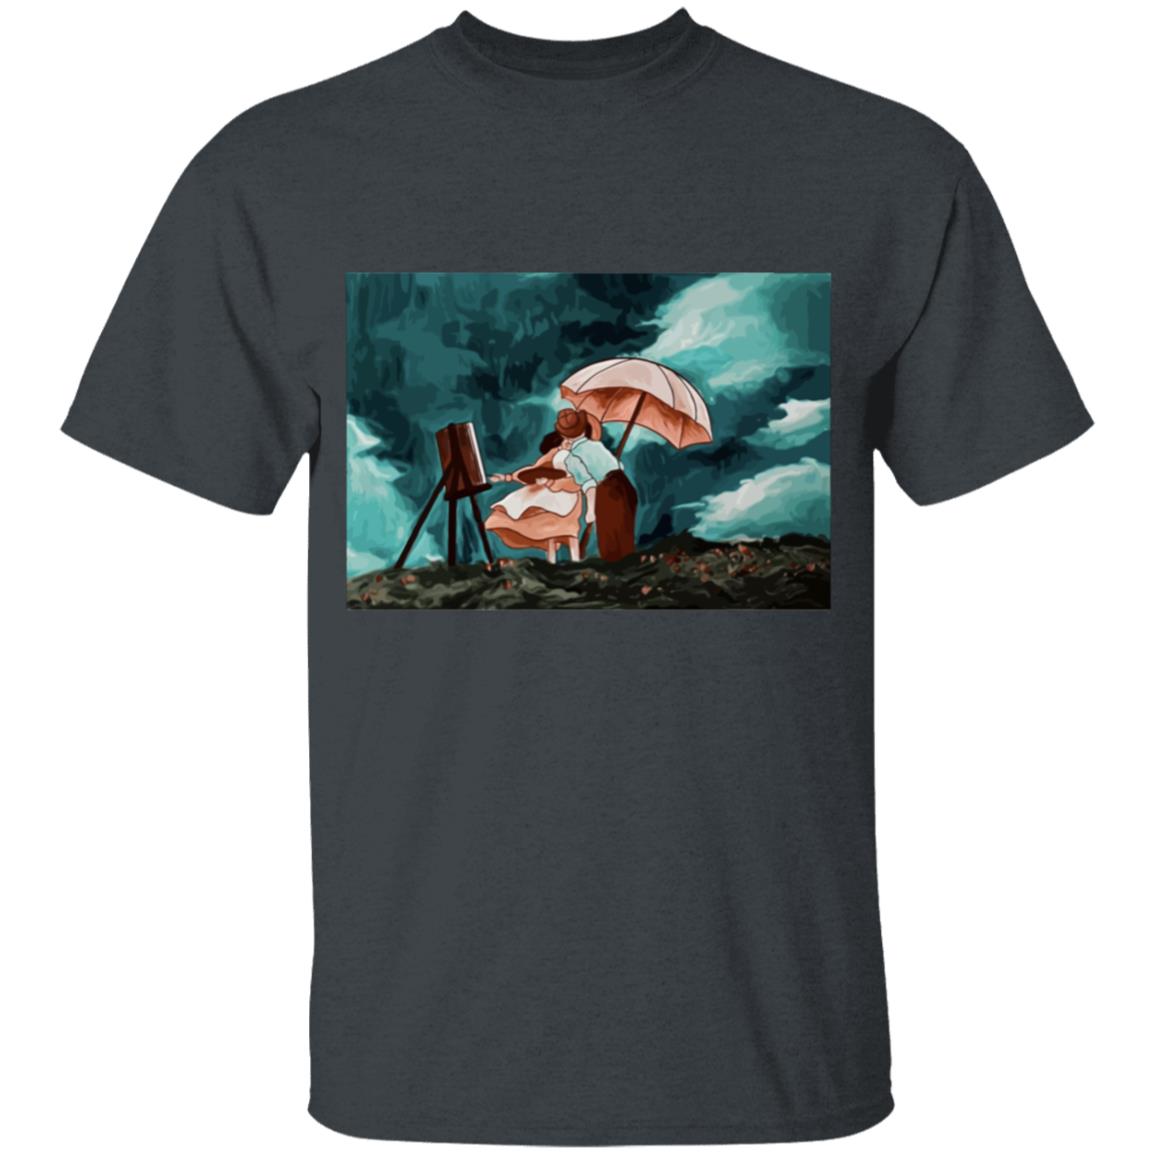 When the wind rises Classic T Shirt for Kid Ghibli Store ghibli.store